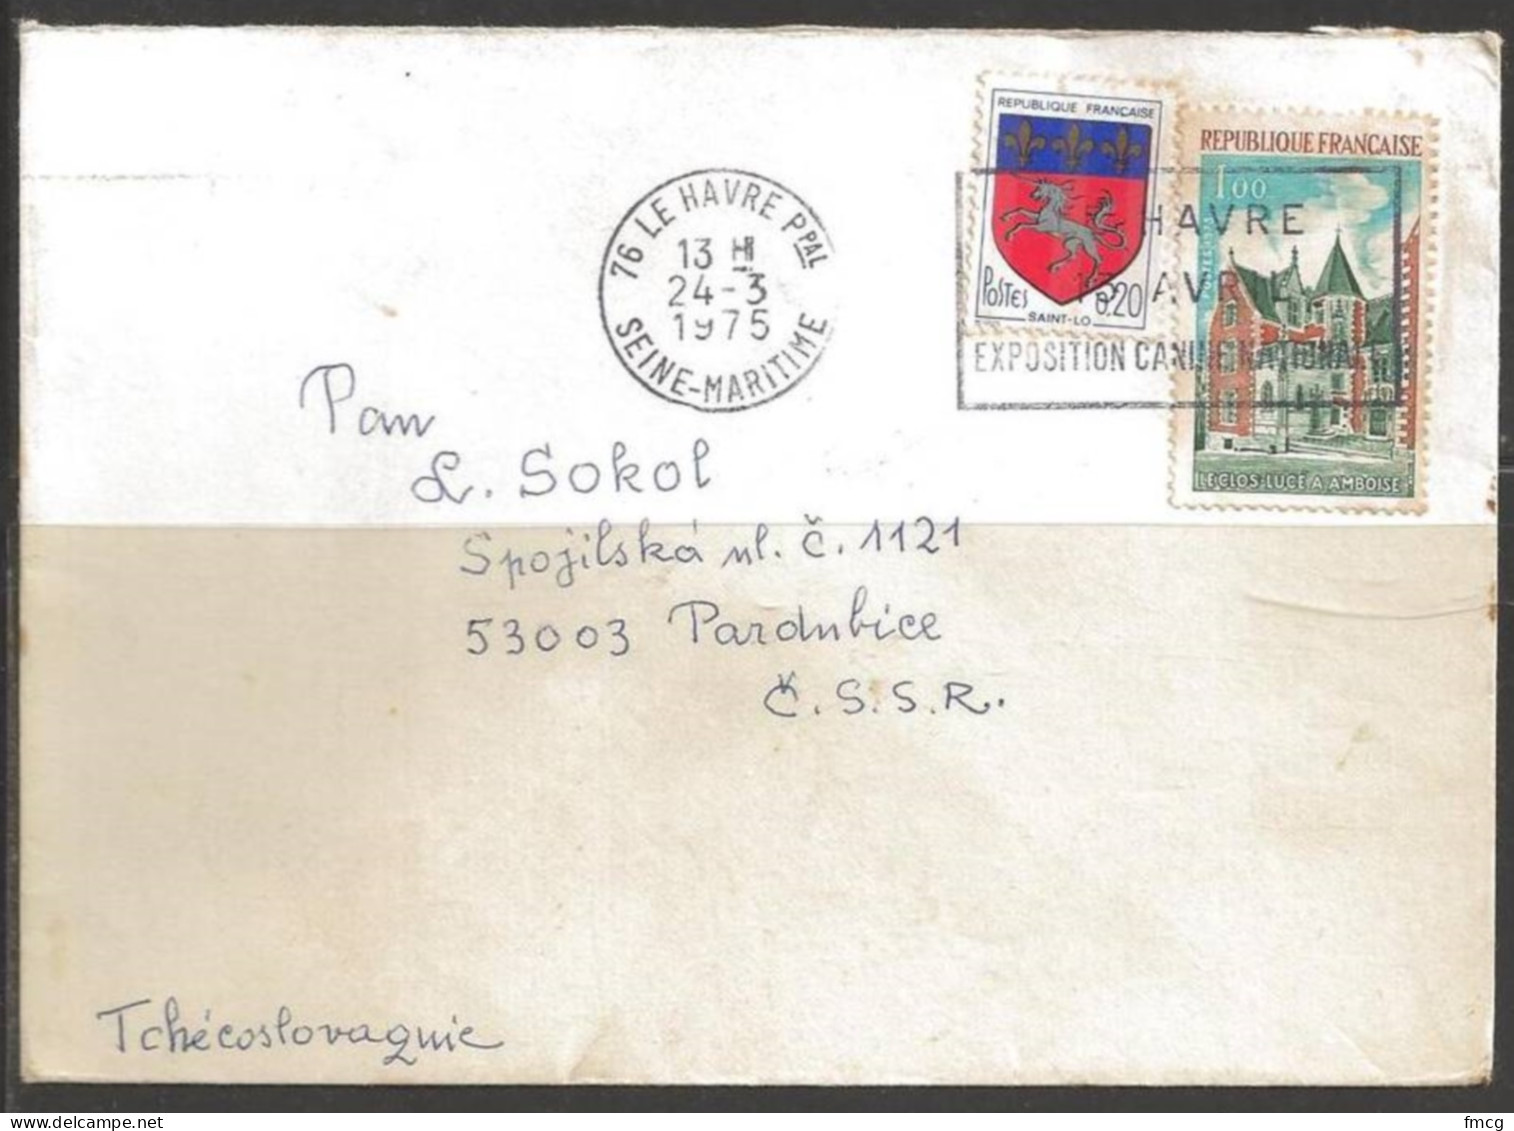  1977 1.00fr Clos-Luce, Amboise, LeHavre (24-3-1975) To Czechoslovakia. - Covers & Documents